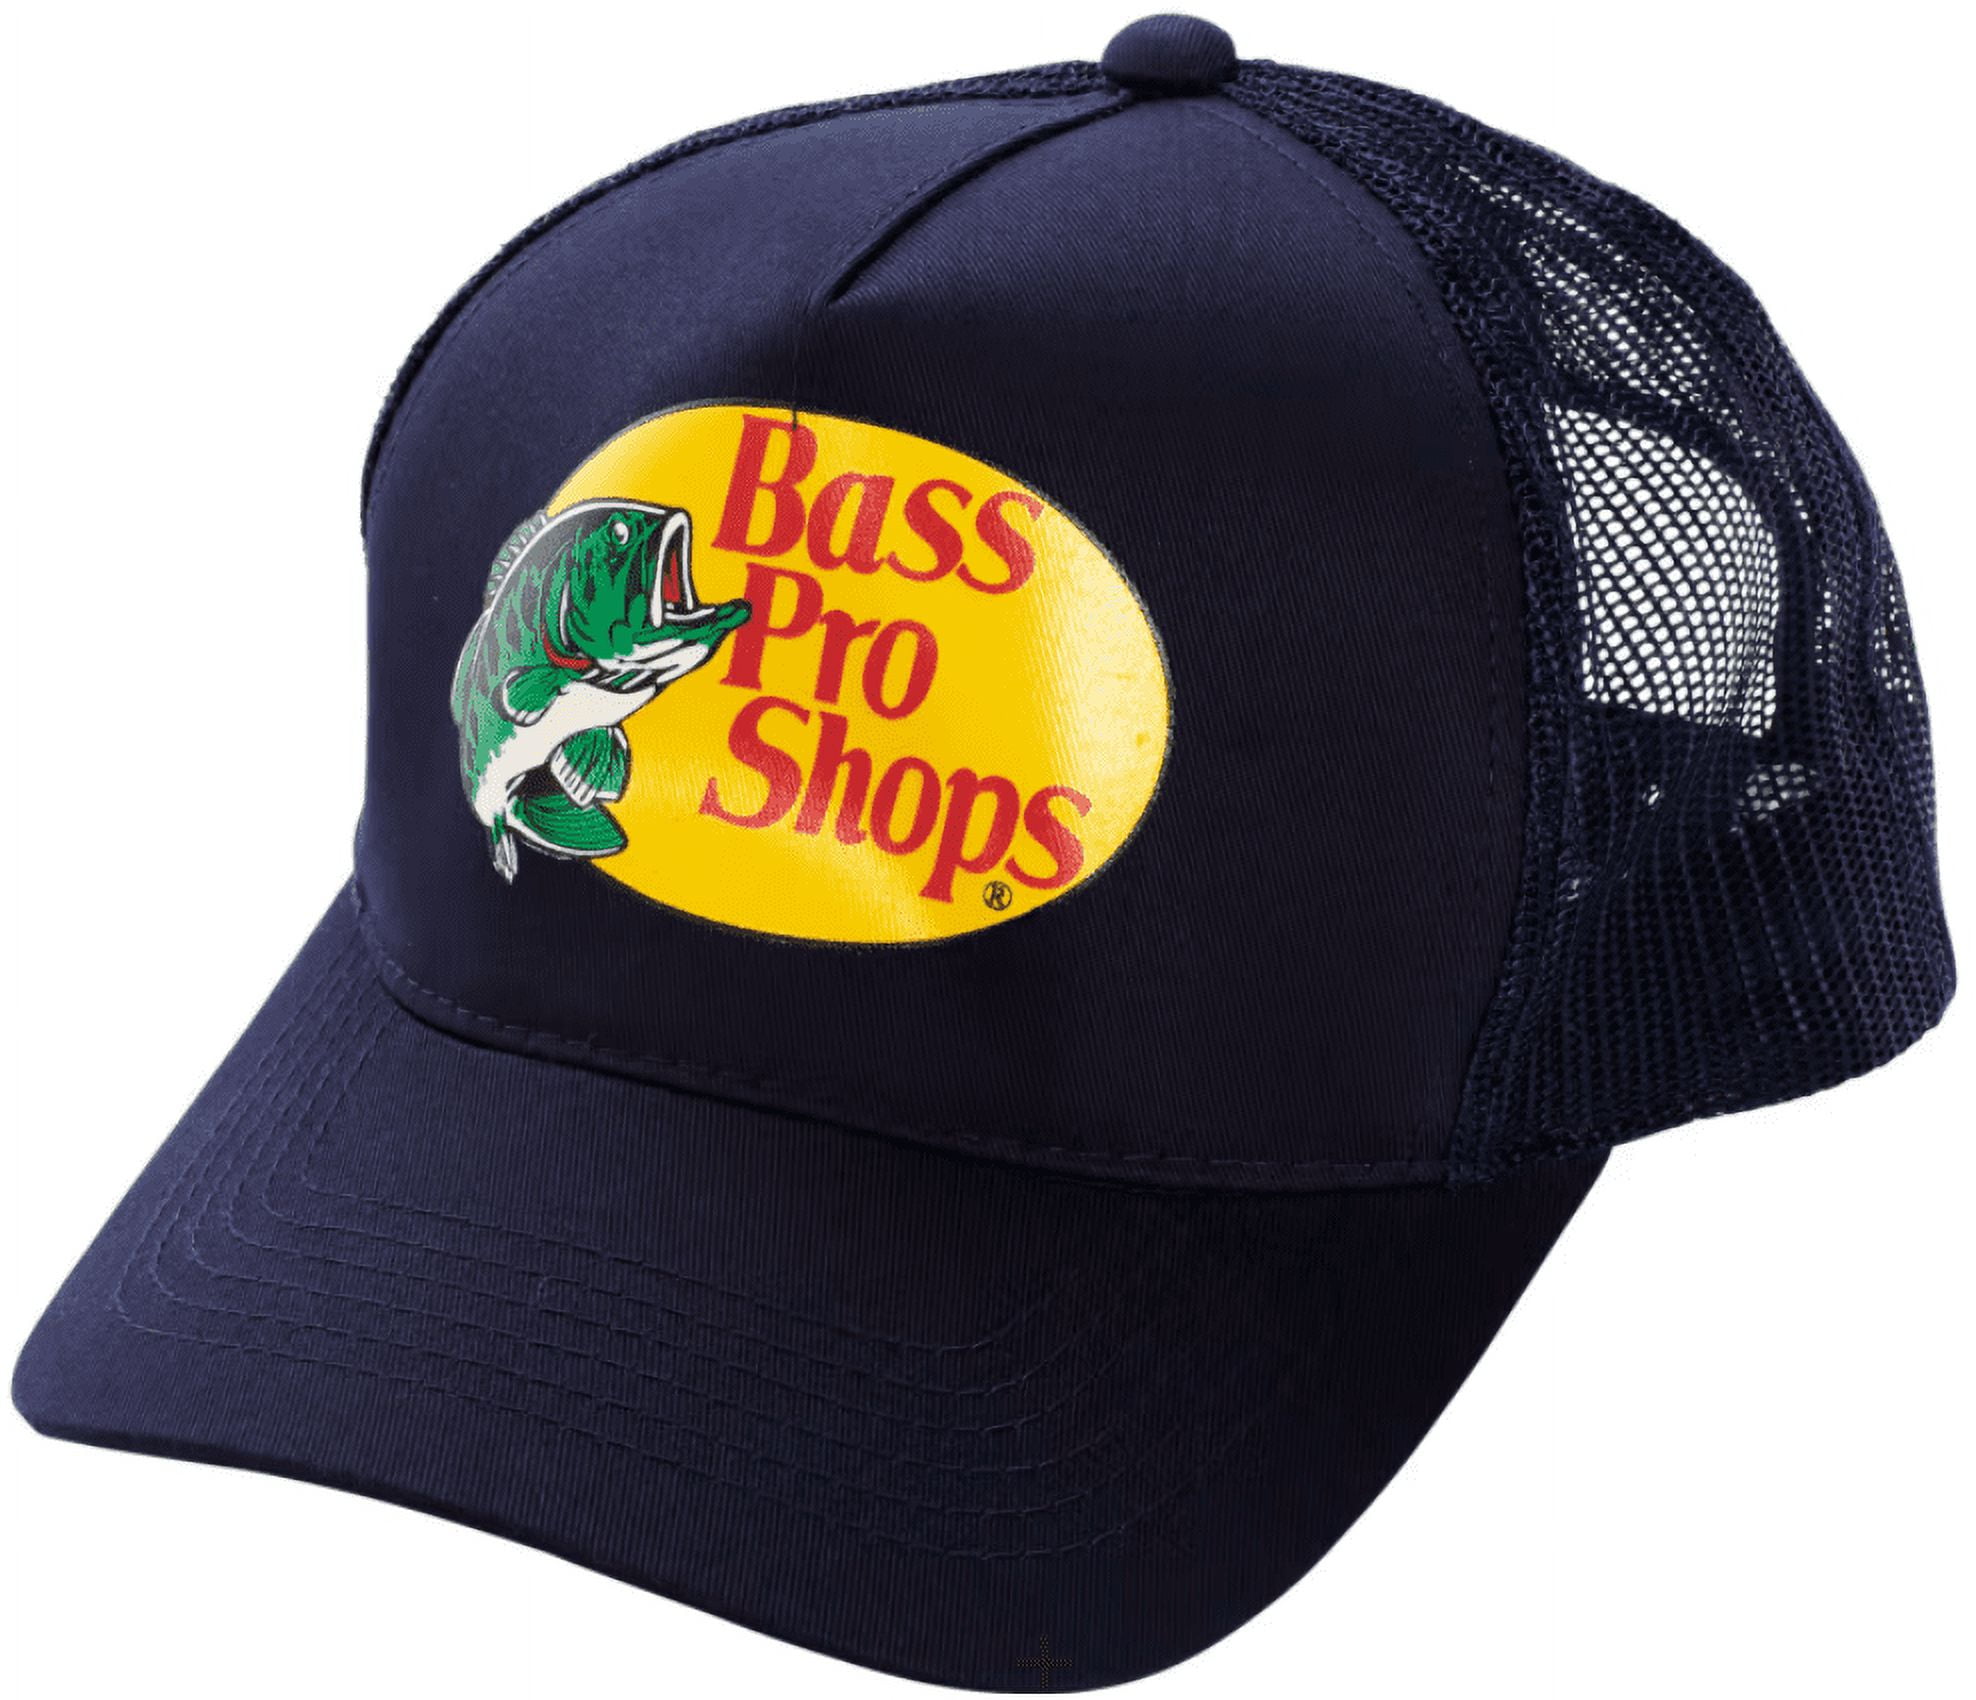 Bass Pro Shop Men's Trucker Hat Mesh Cap - One Size Fits All - Snapback  Closure - Navy Blue